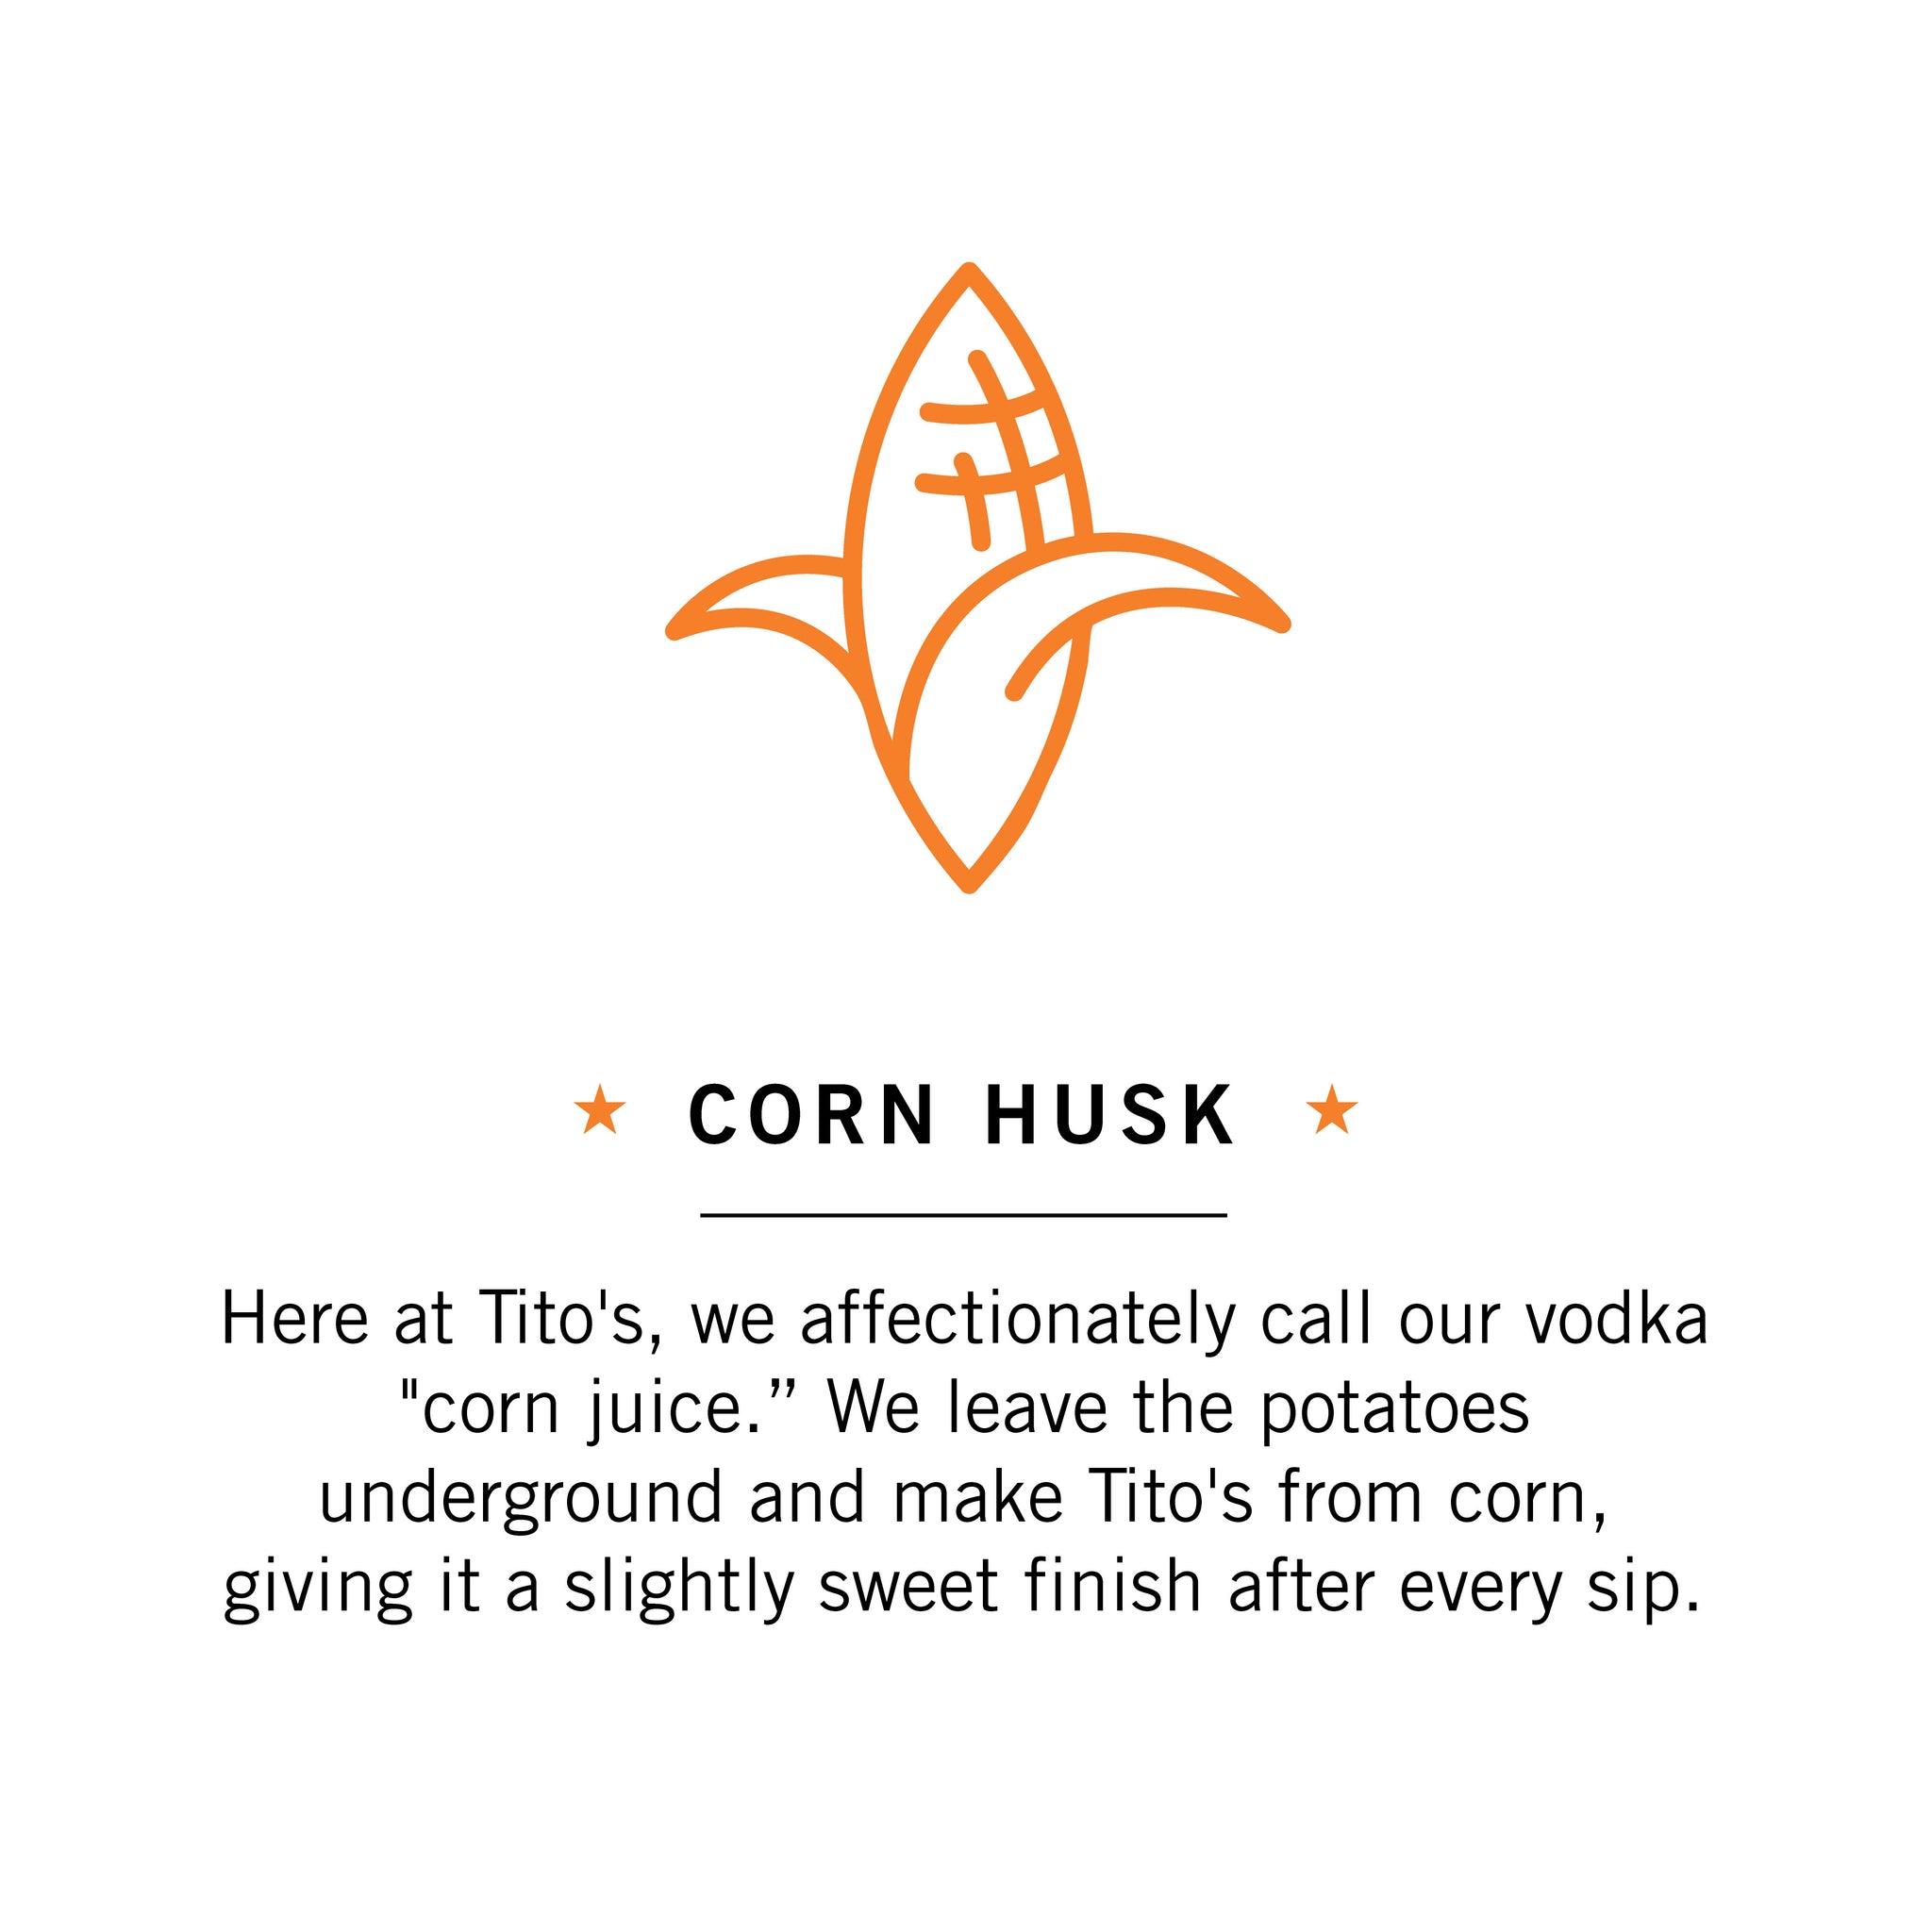 Corn Husk Illustration